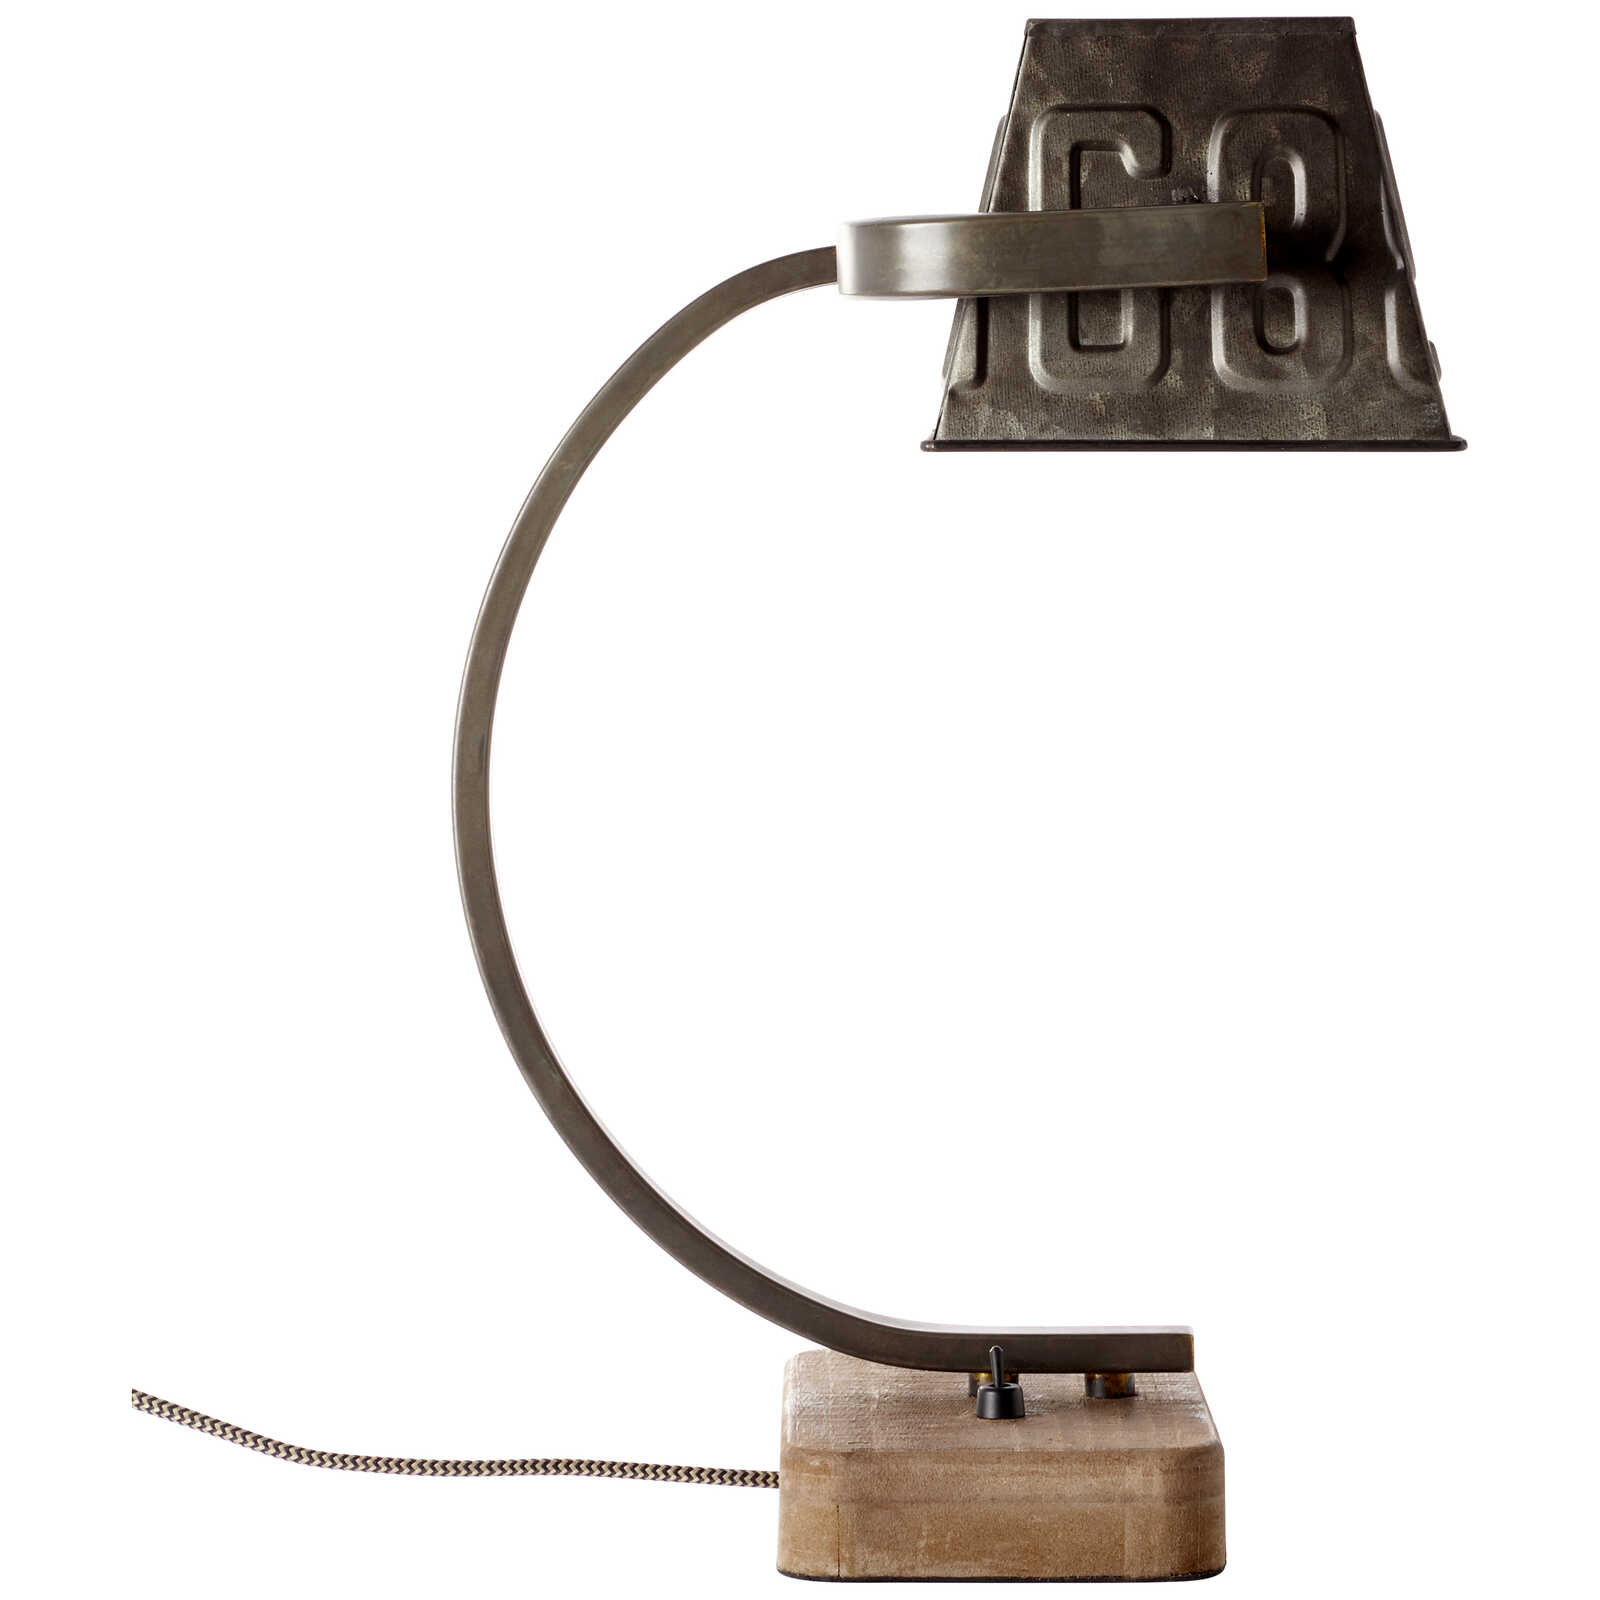             Wooden table lamp - Ferdinand - Brown
        